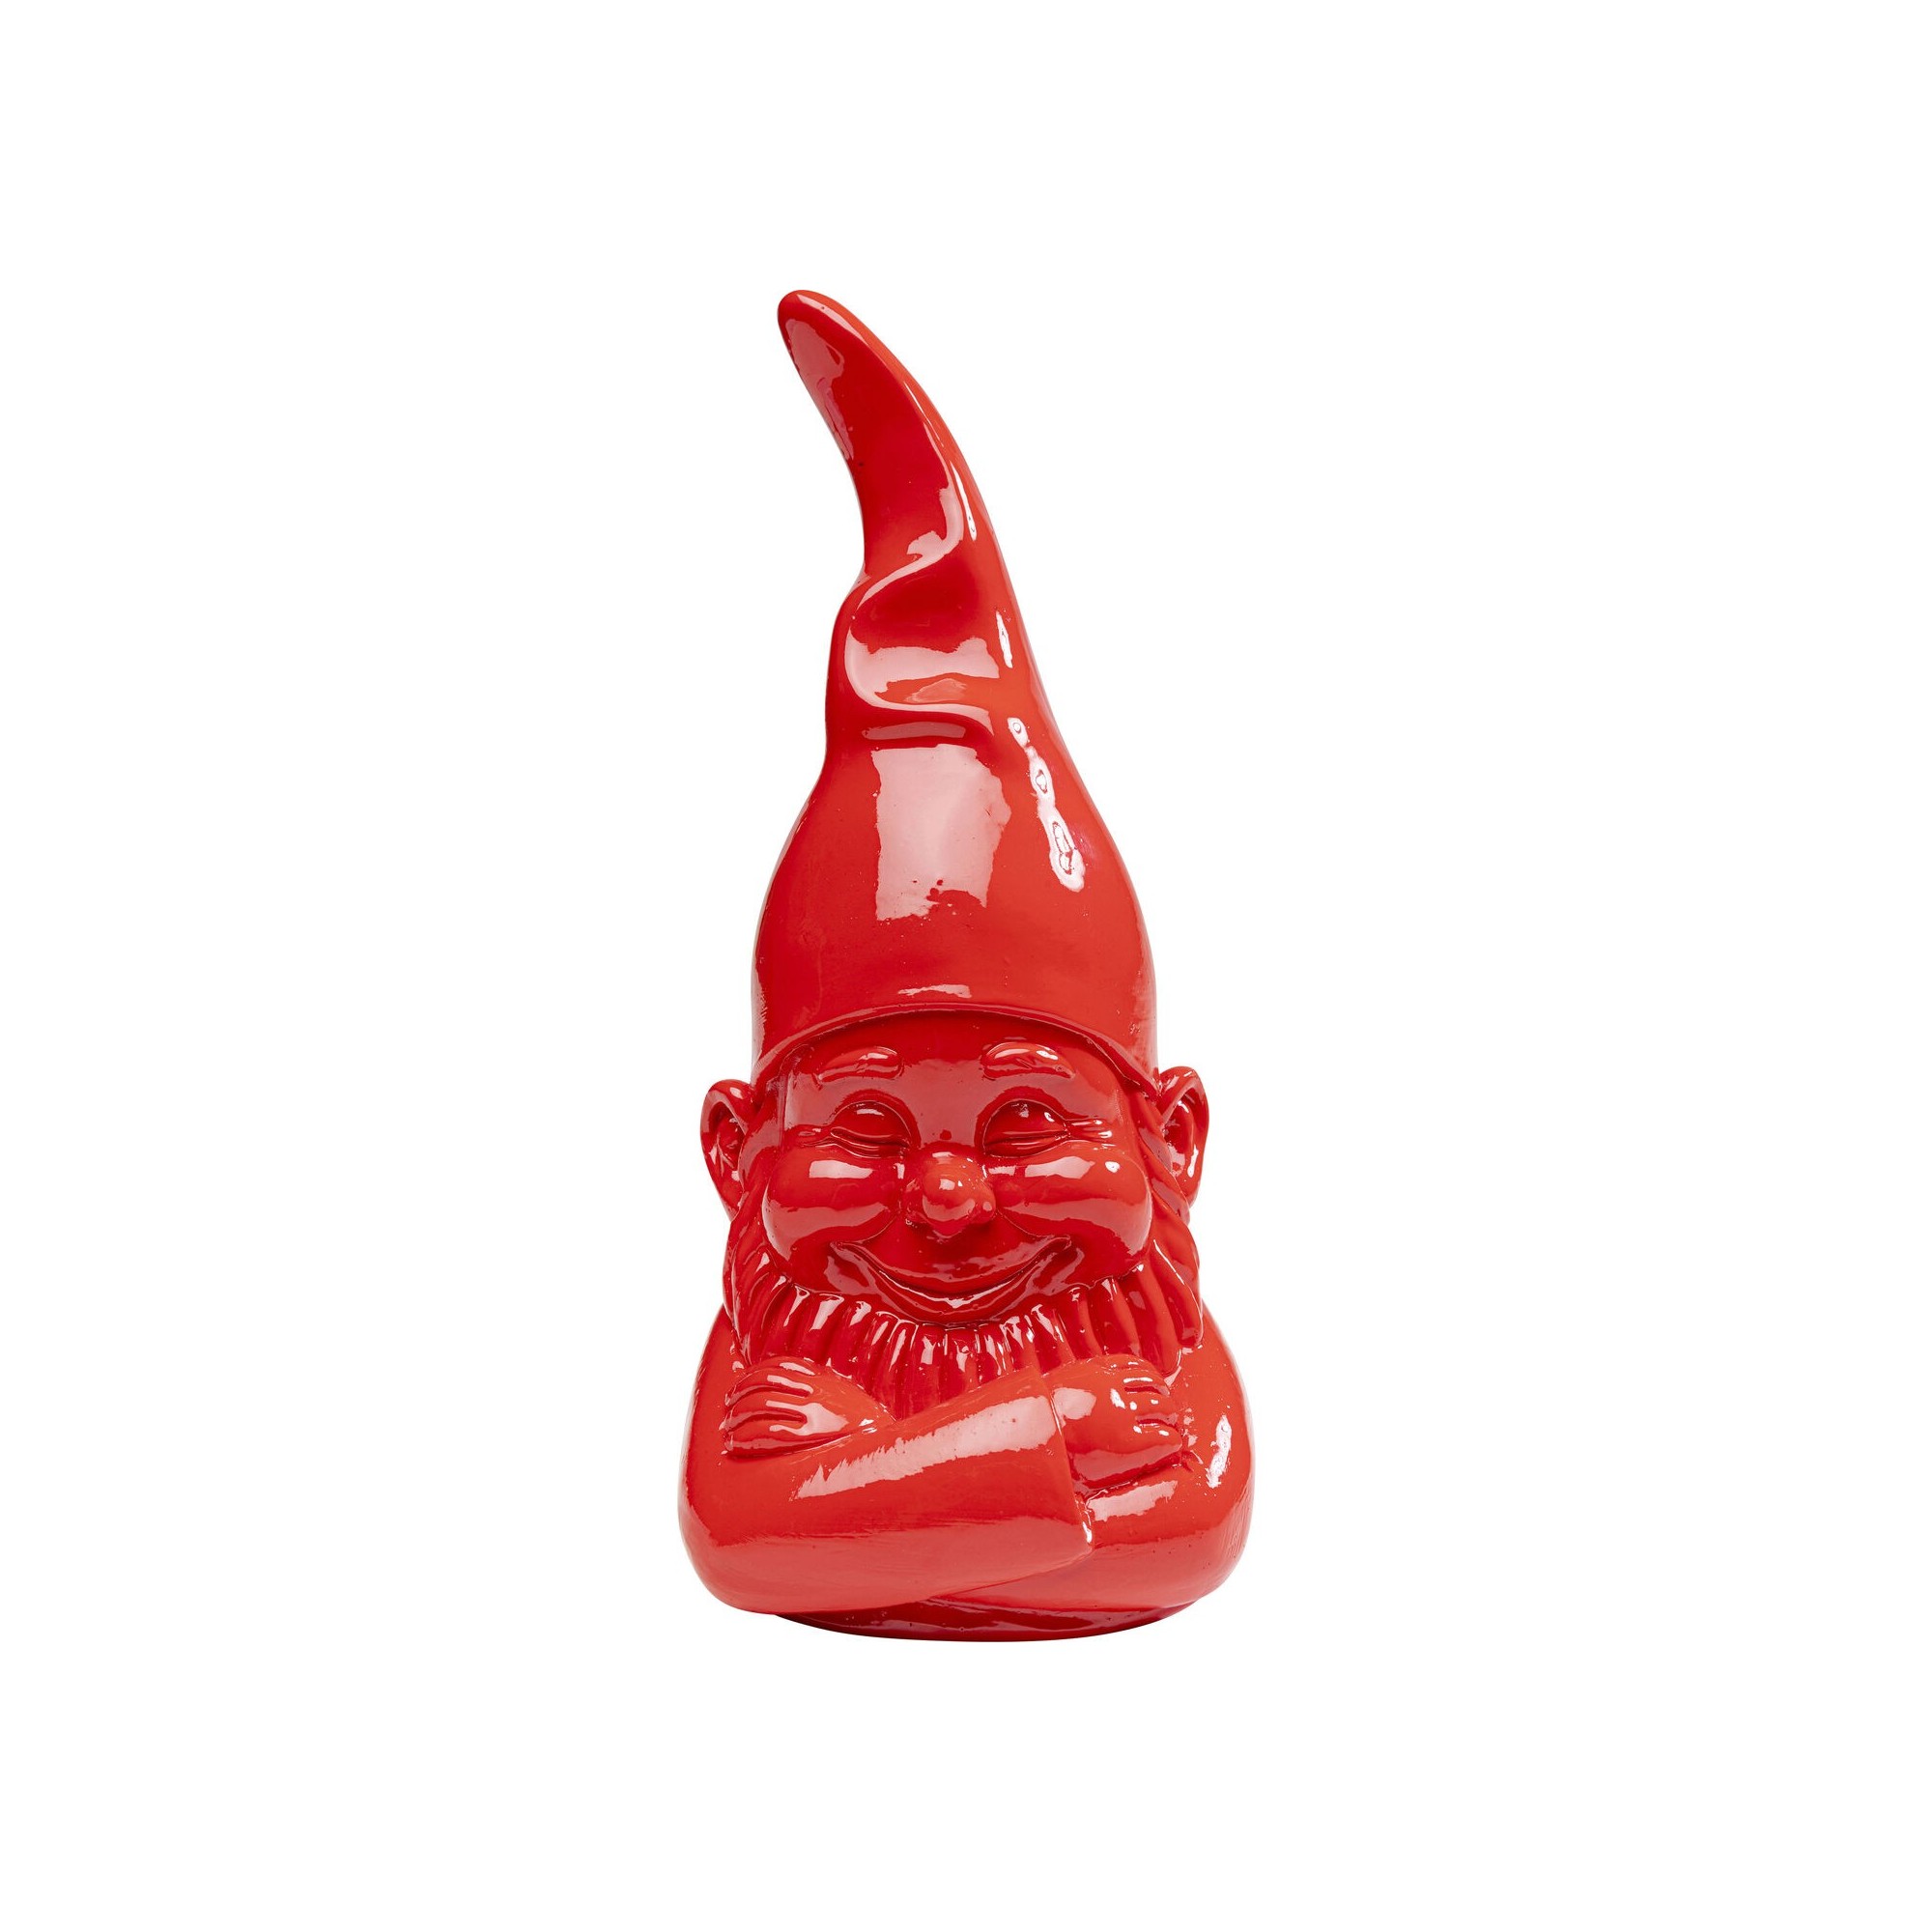 Figurine décorative Nain rouge 21cm